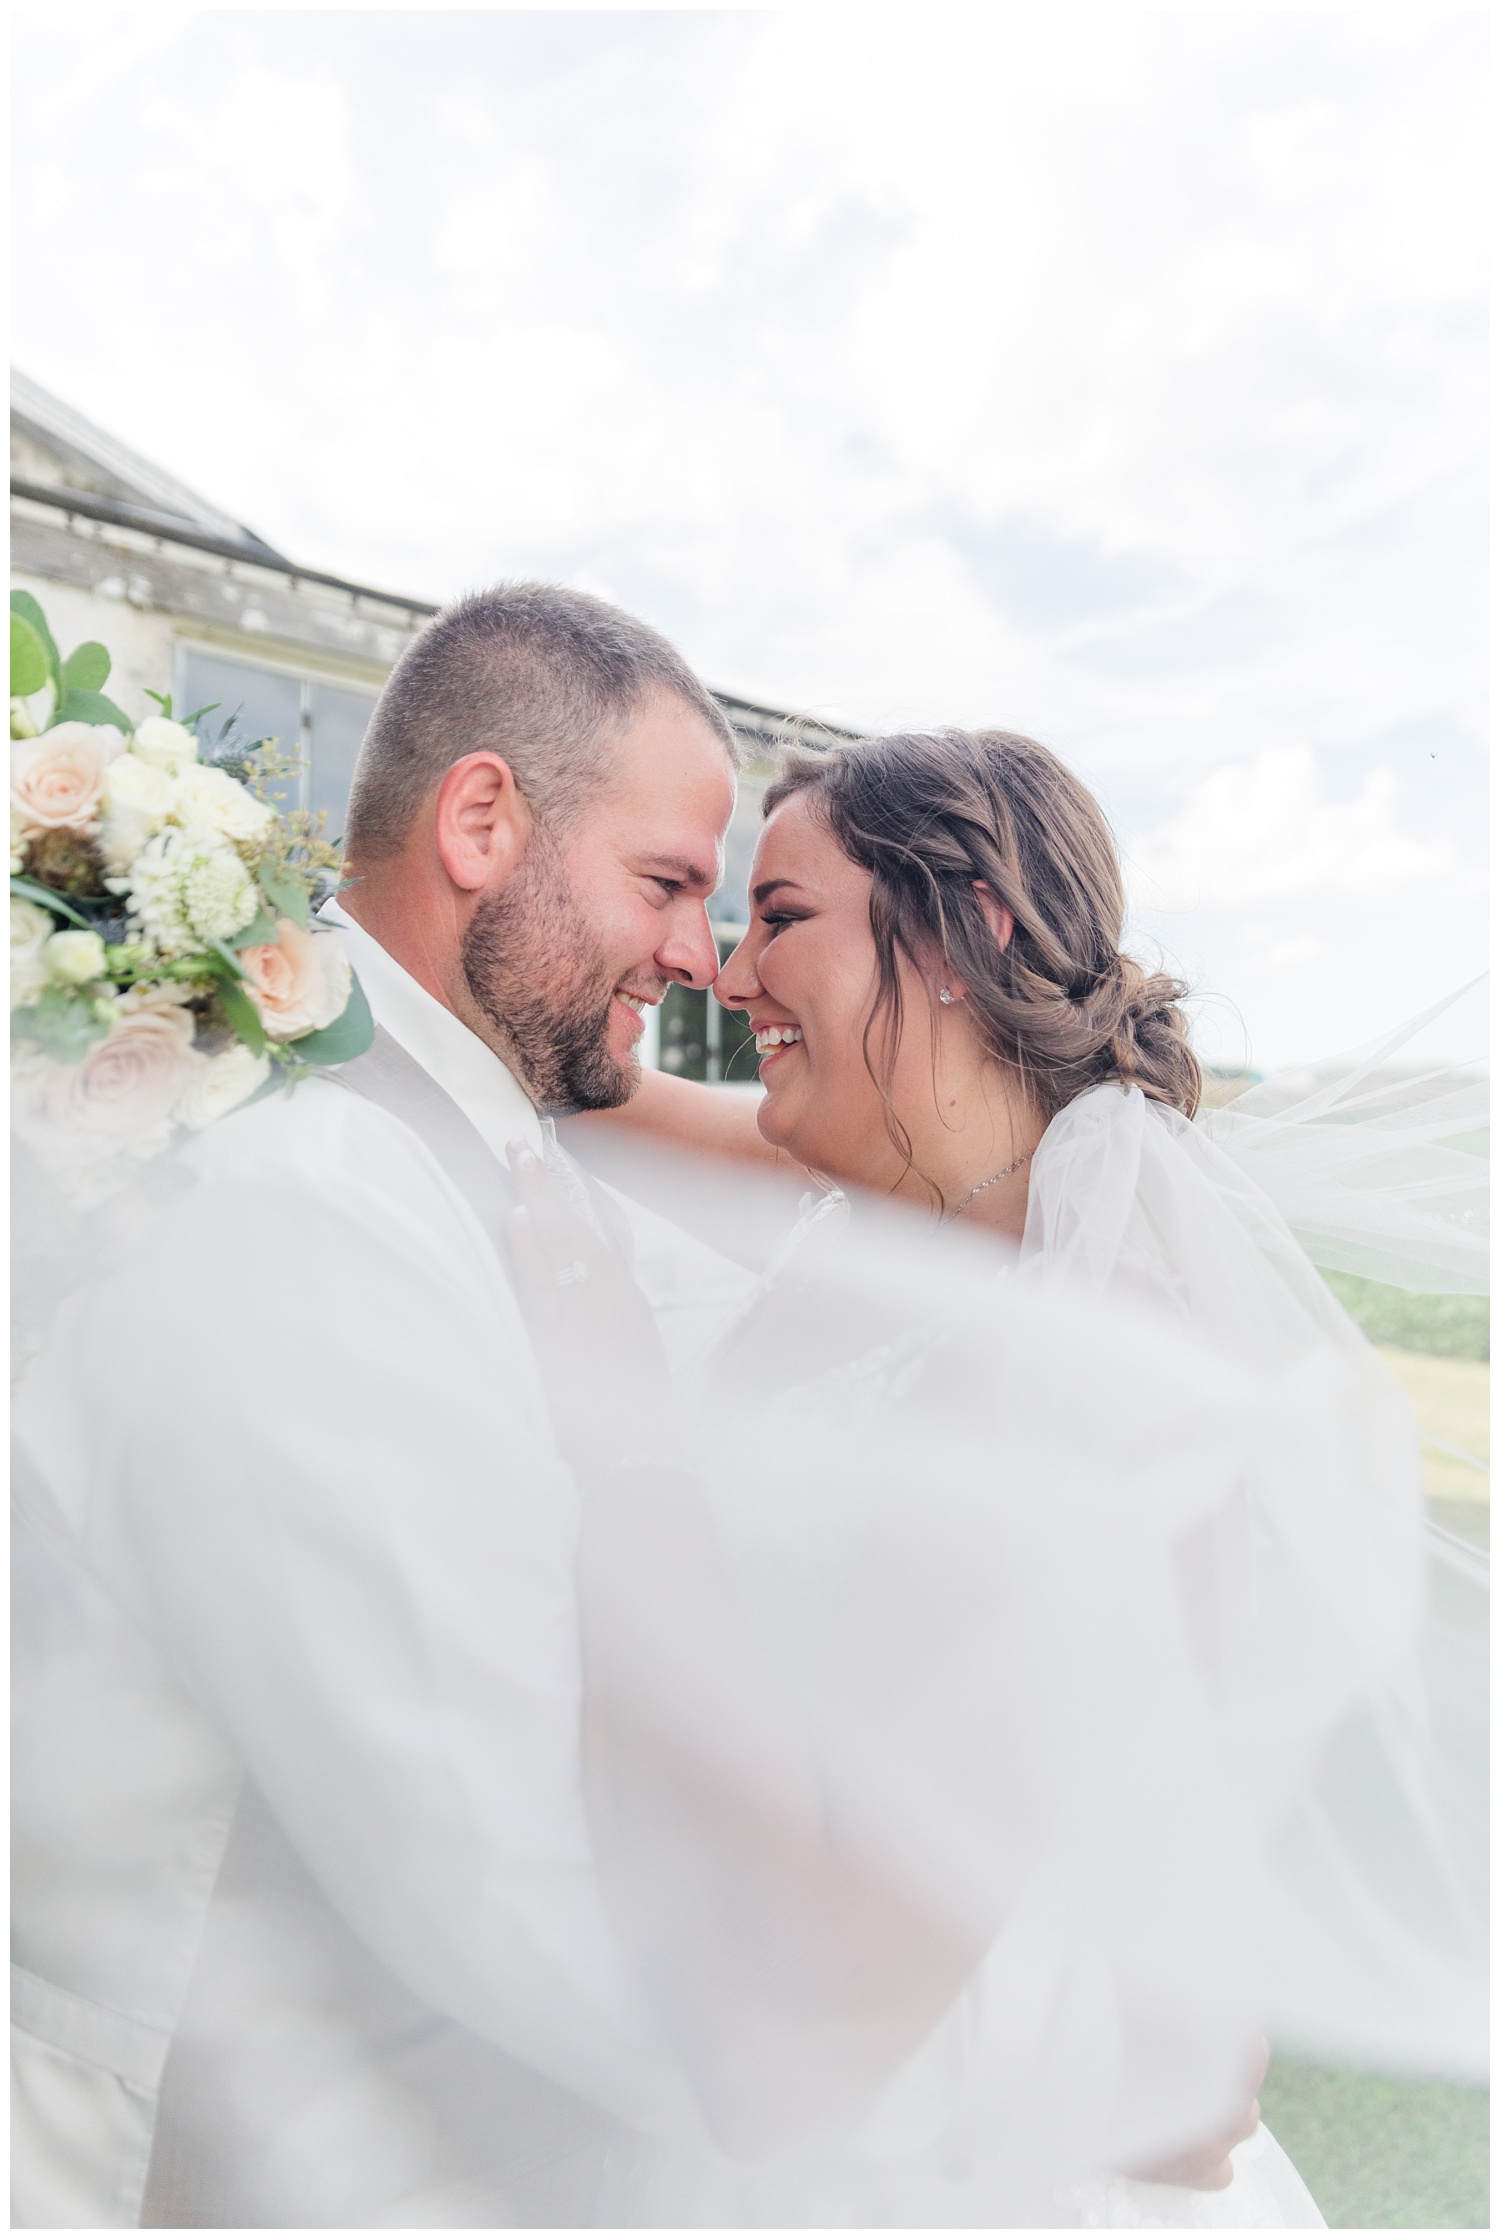 veil wrapped around a wedding couple for photos on a farm